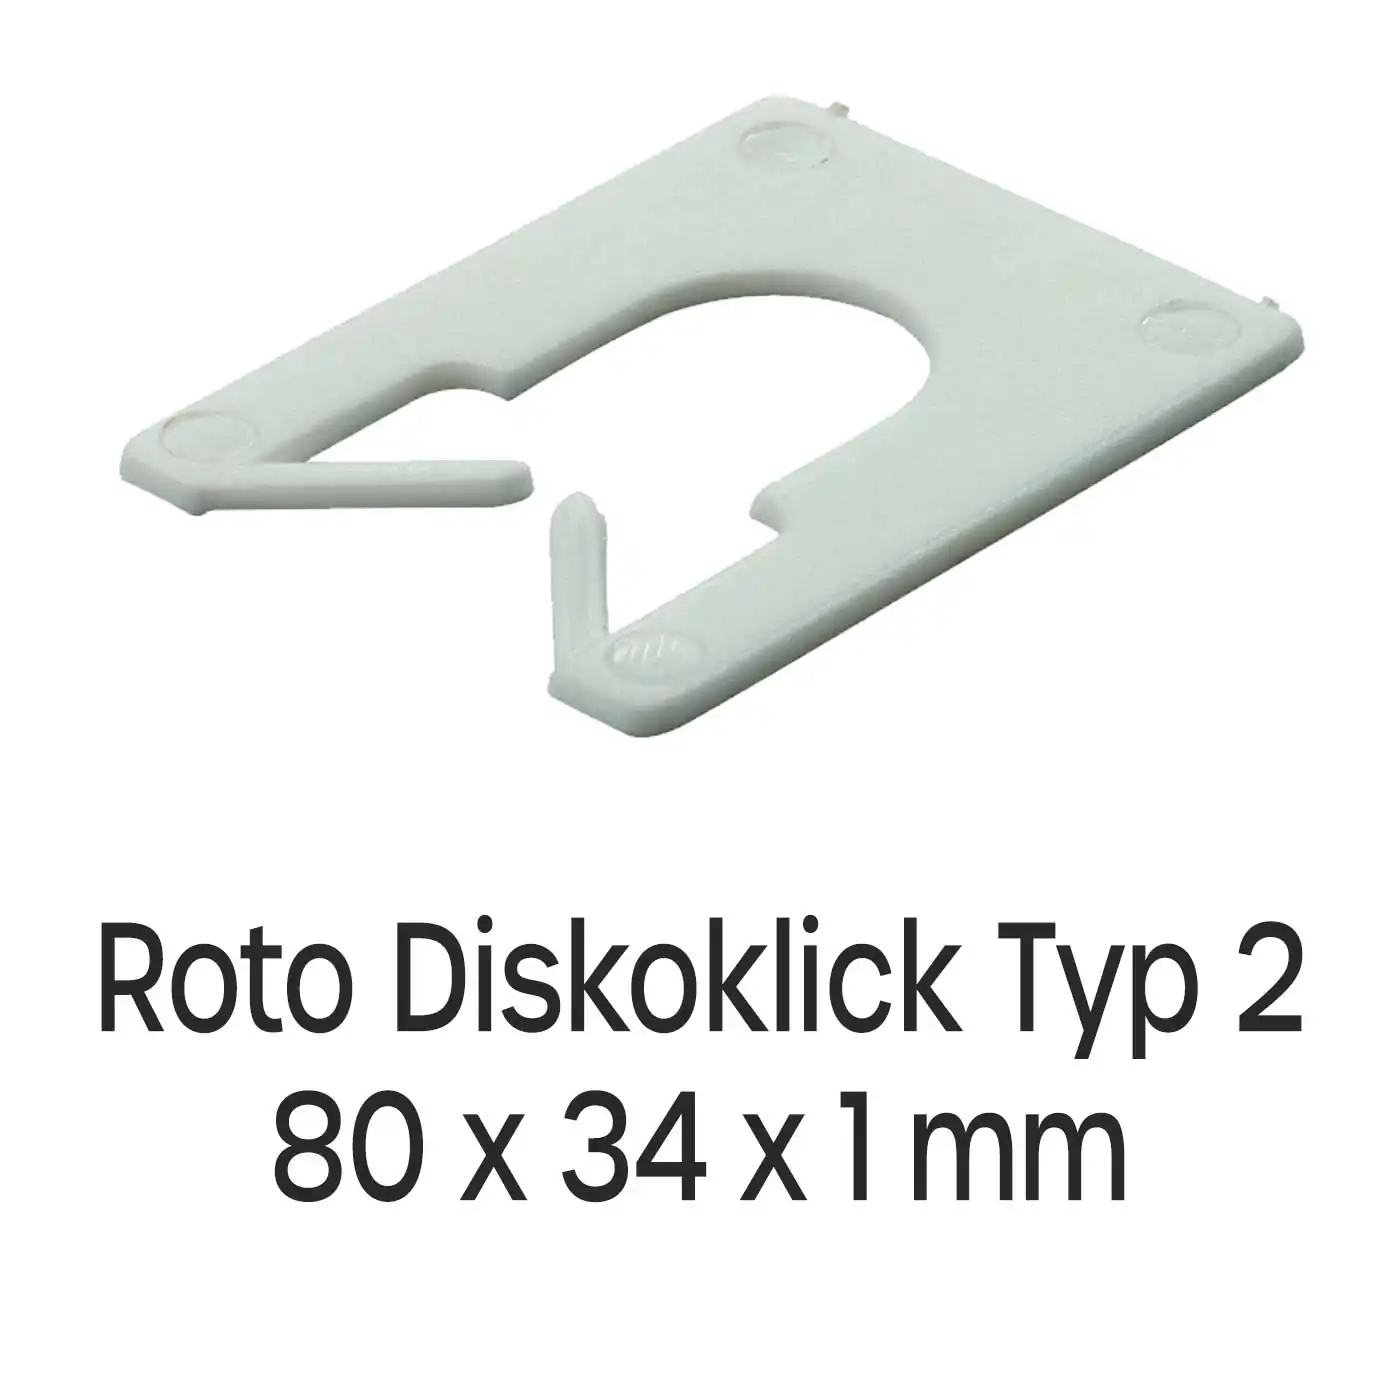 Distanzplatten Roto Diskoklick Typ 2 80 x 34 x 1 mm 1000 Stück